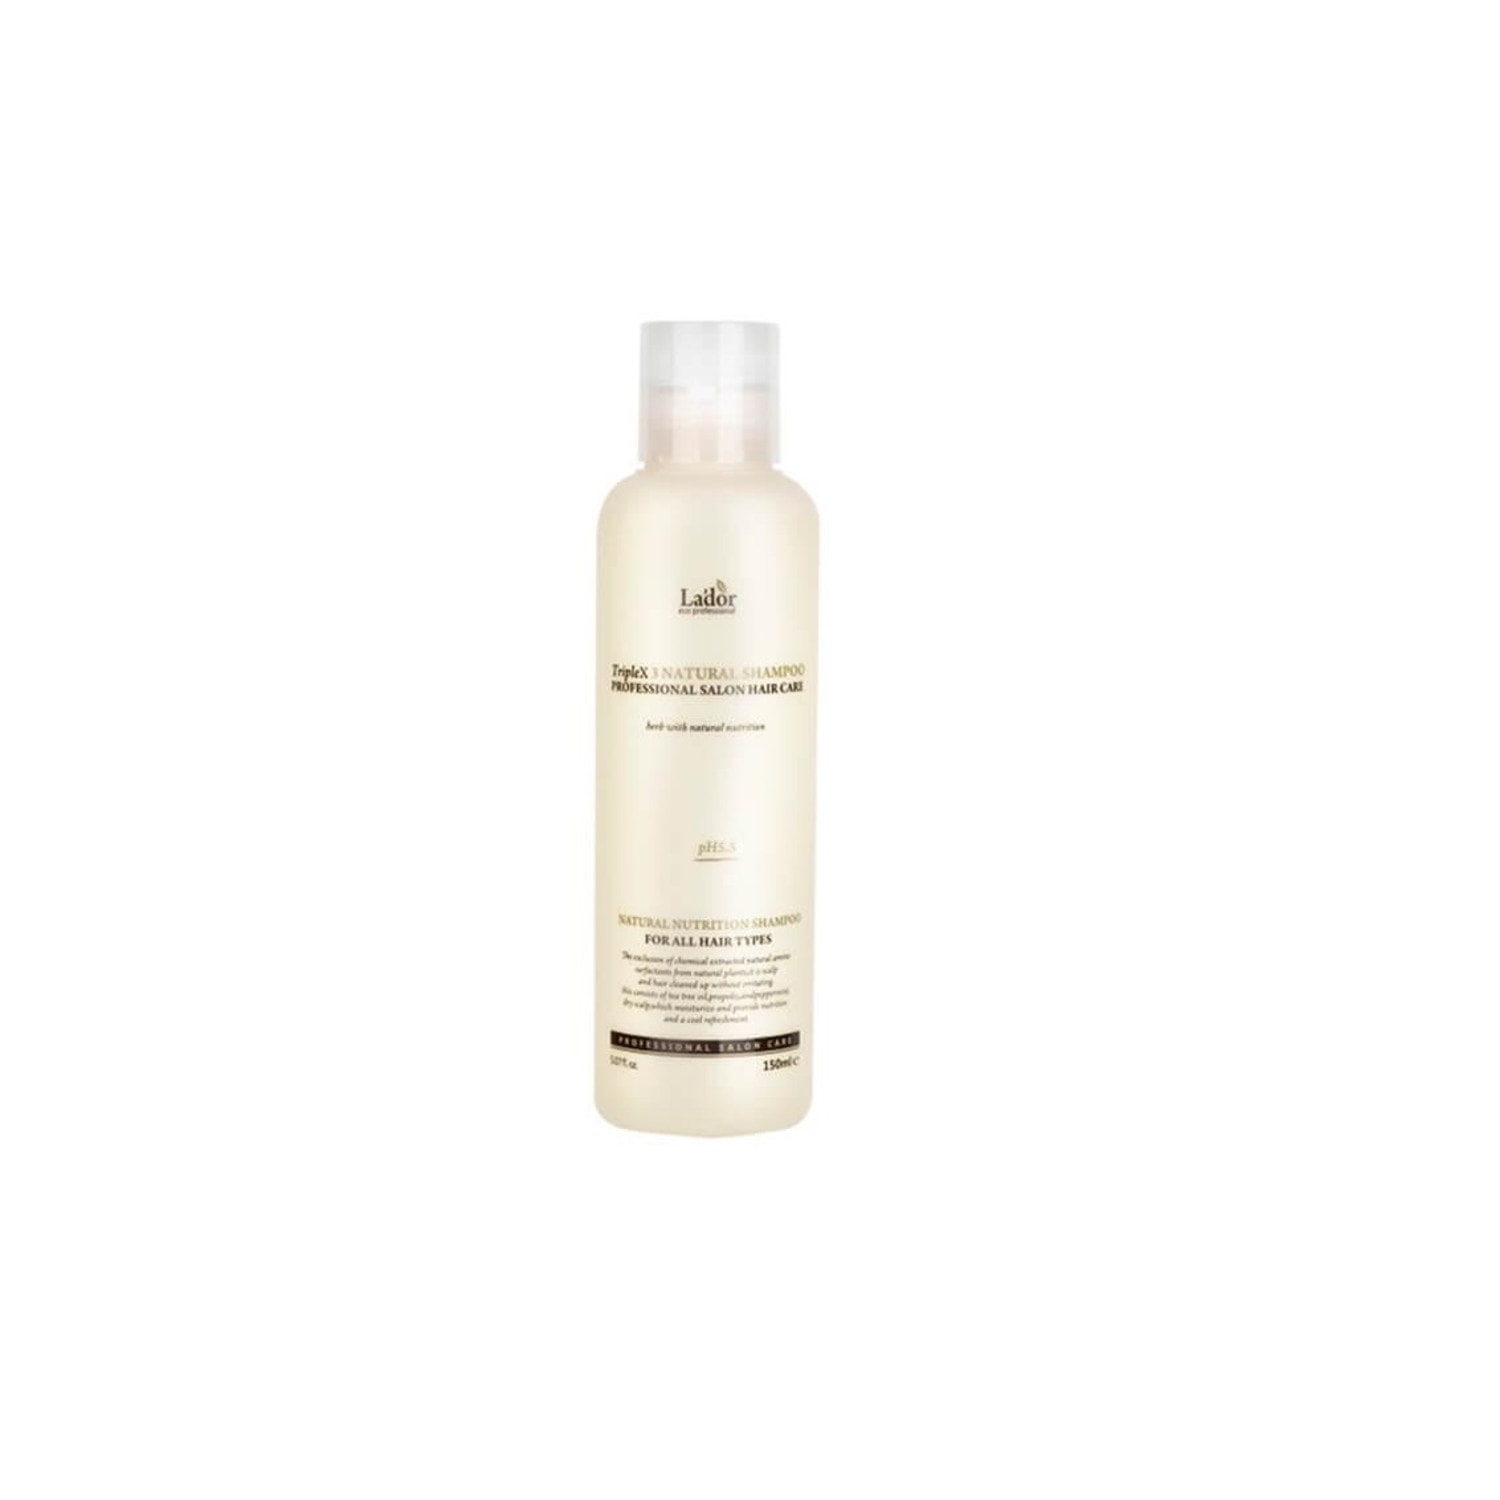 La'dor Triple x3 natural shampoo Шампунь с натуральными ингредиентами, 150мл/ 811008